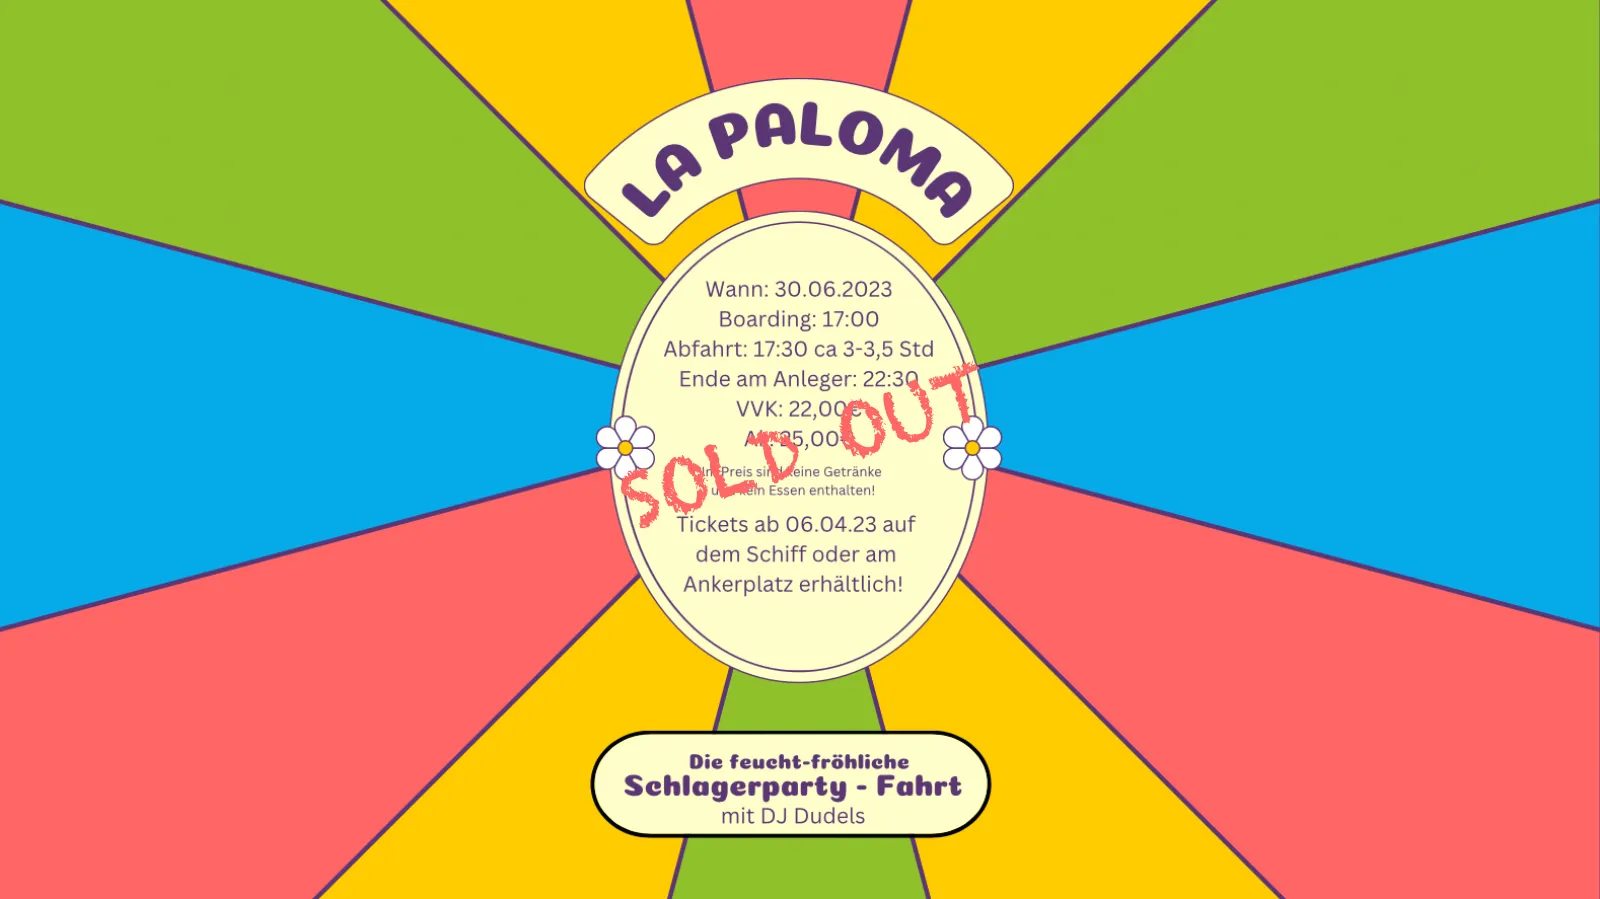 La-Paloma-Sold-Out-2023-1600x900